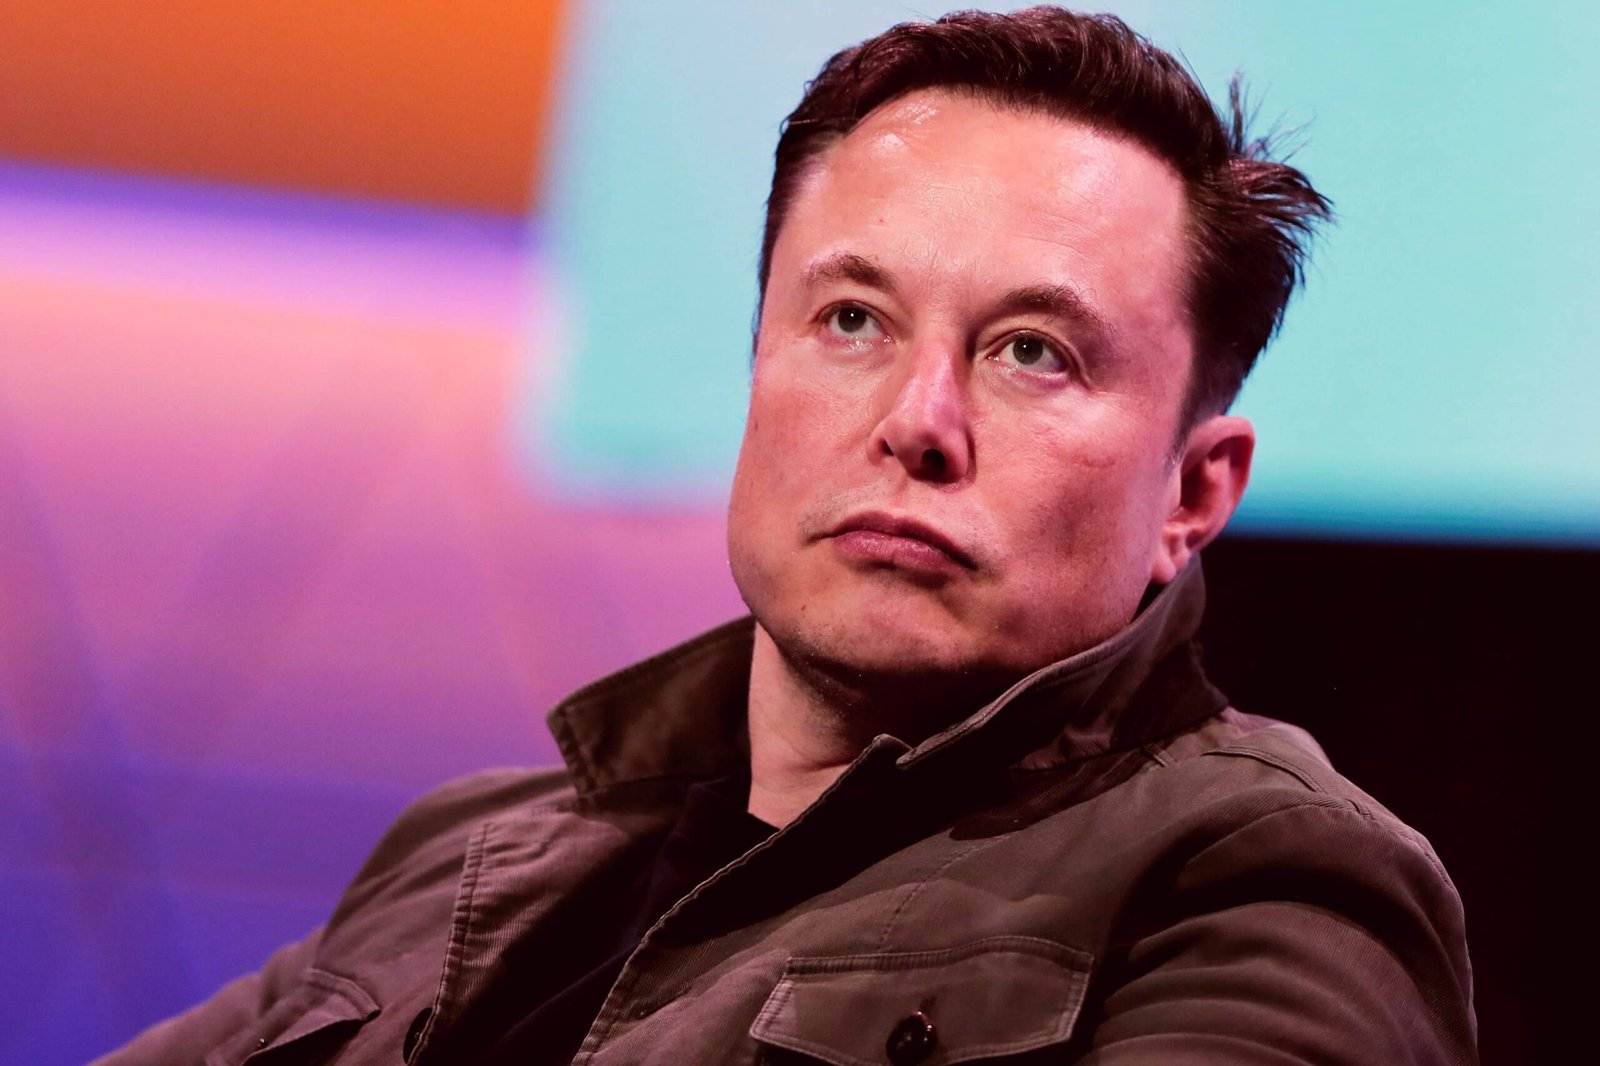 Elon Musk claims Neuralink’s brain implants will ‘save’ memories like photos and help paraplegics walk again. Here’s a reality check